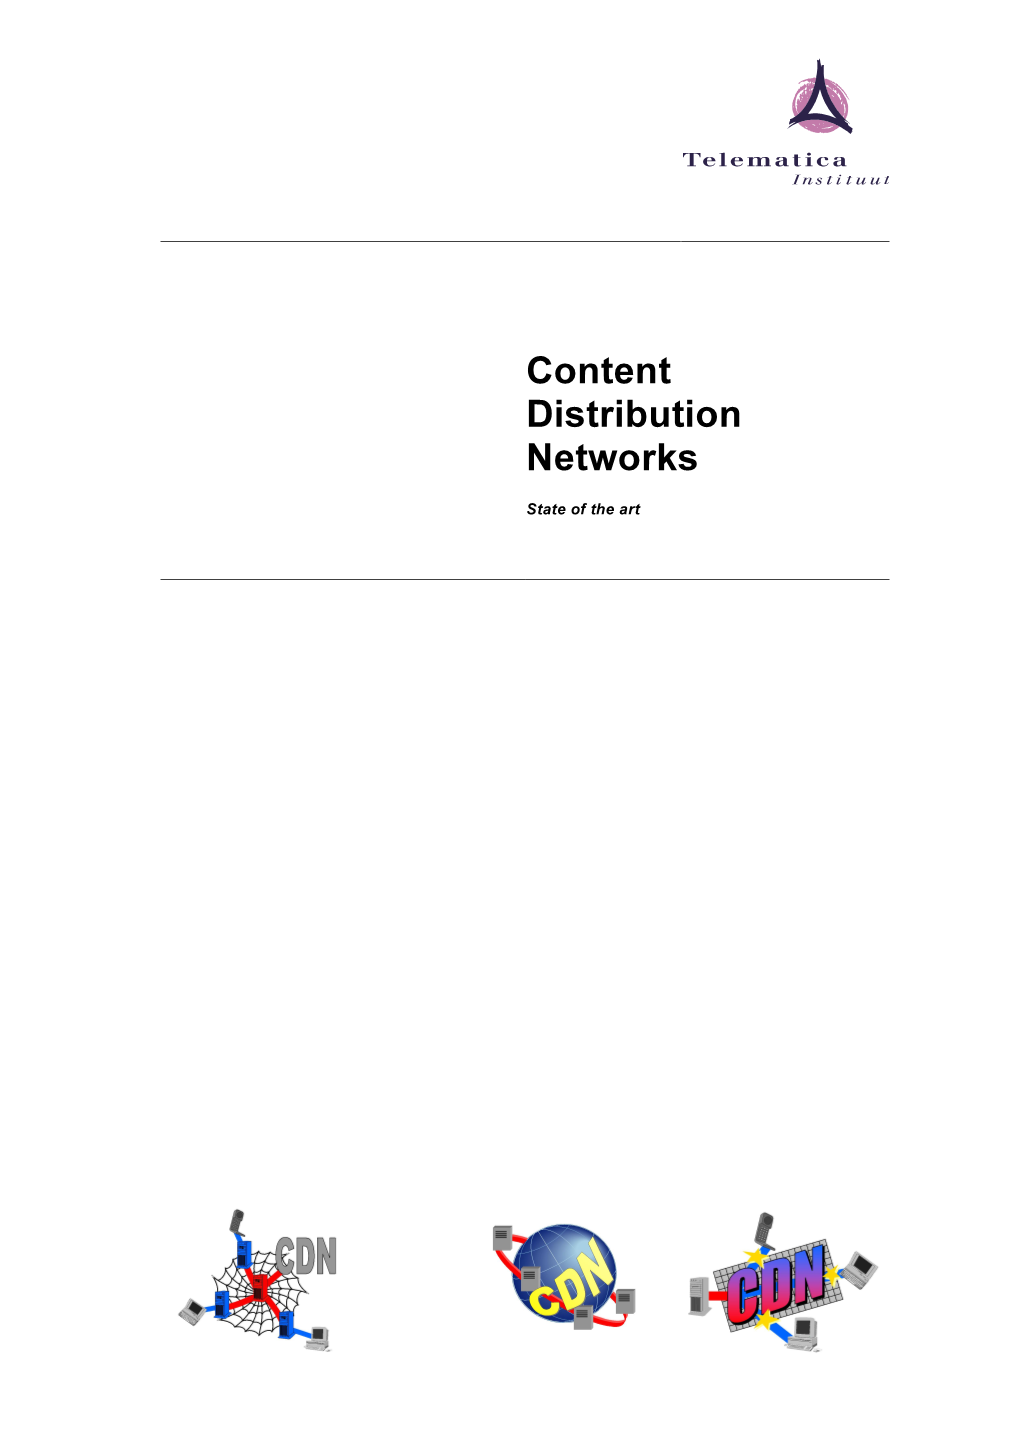 Content Distribution Networks